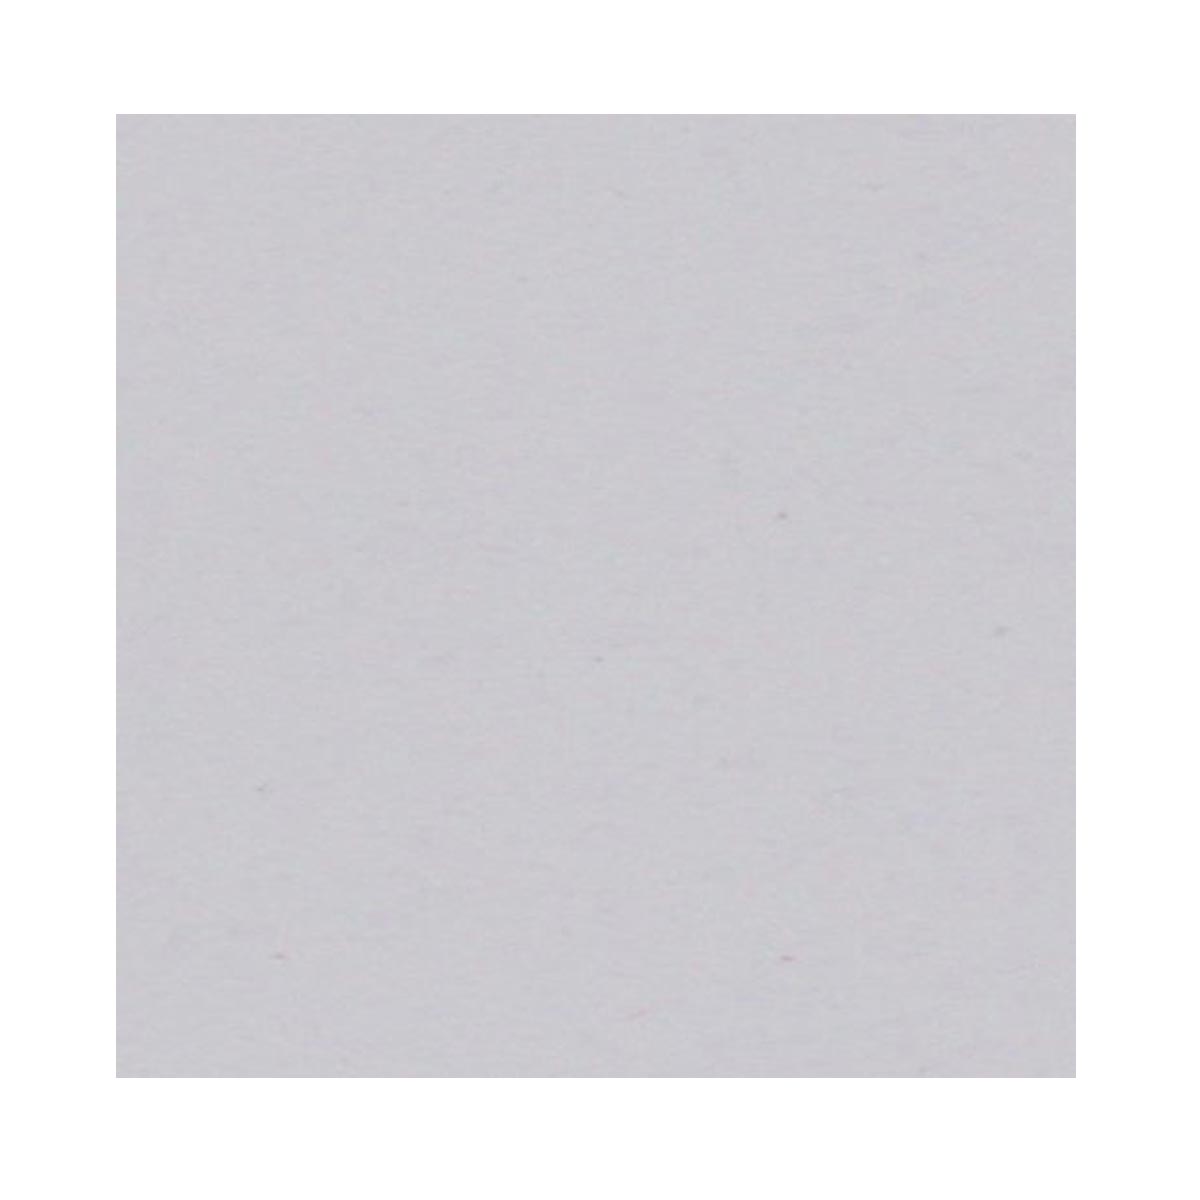 Clairefontaine Pastelmat - Light Grey 50 cm x 70 cm, 360 gsm